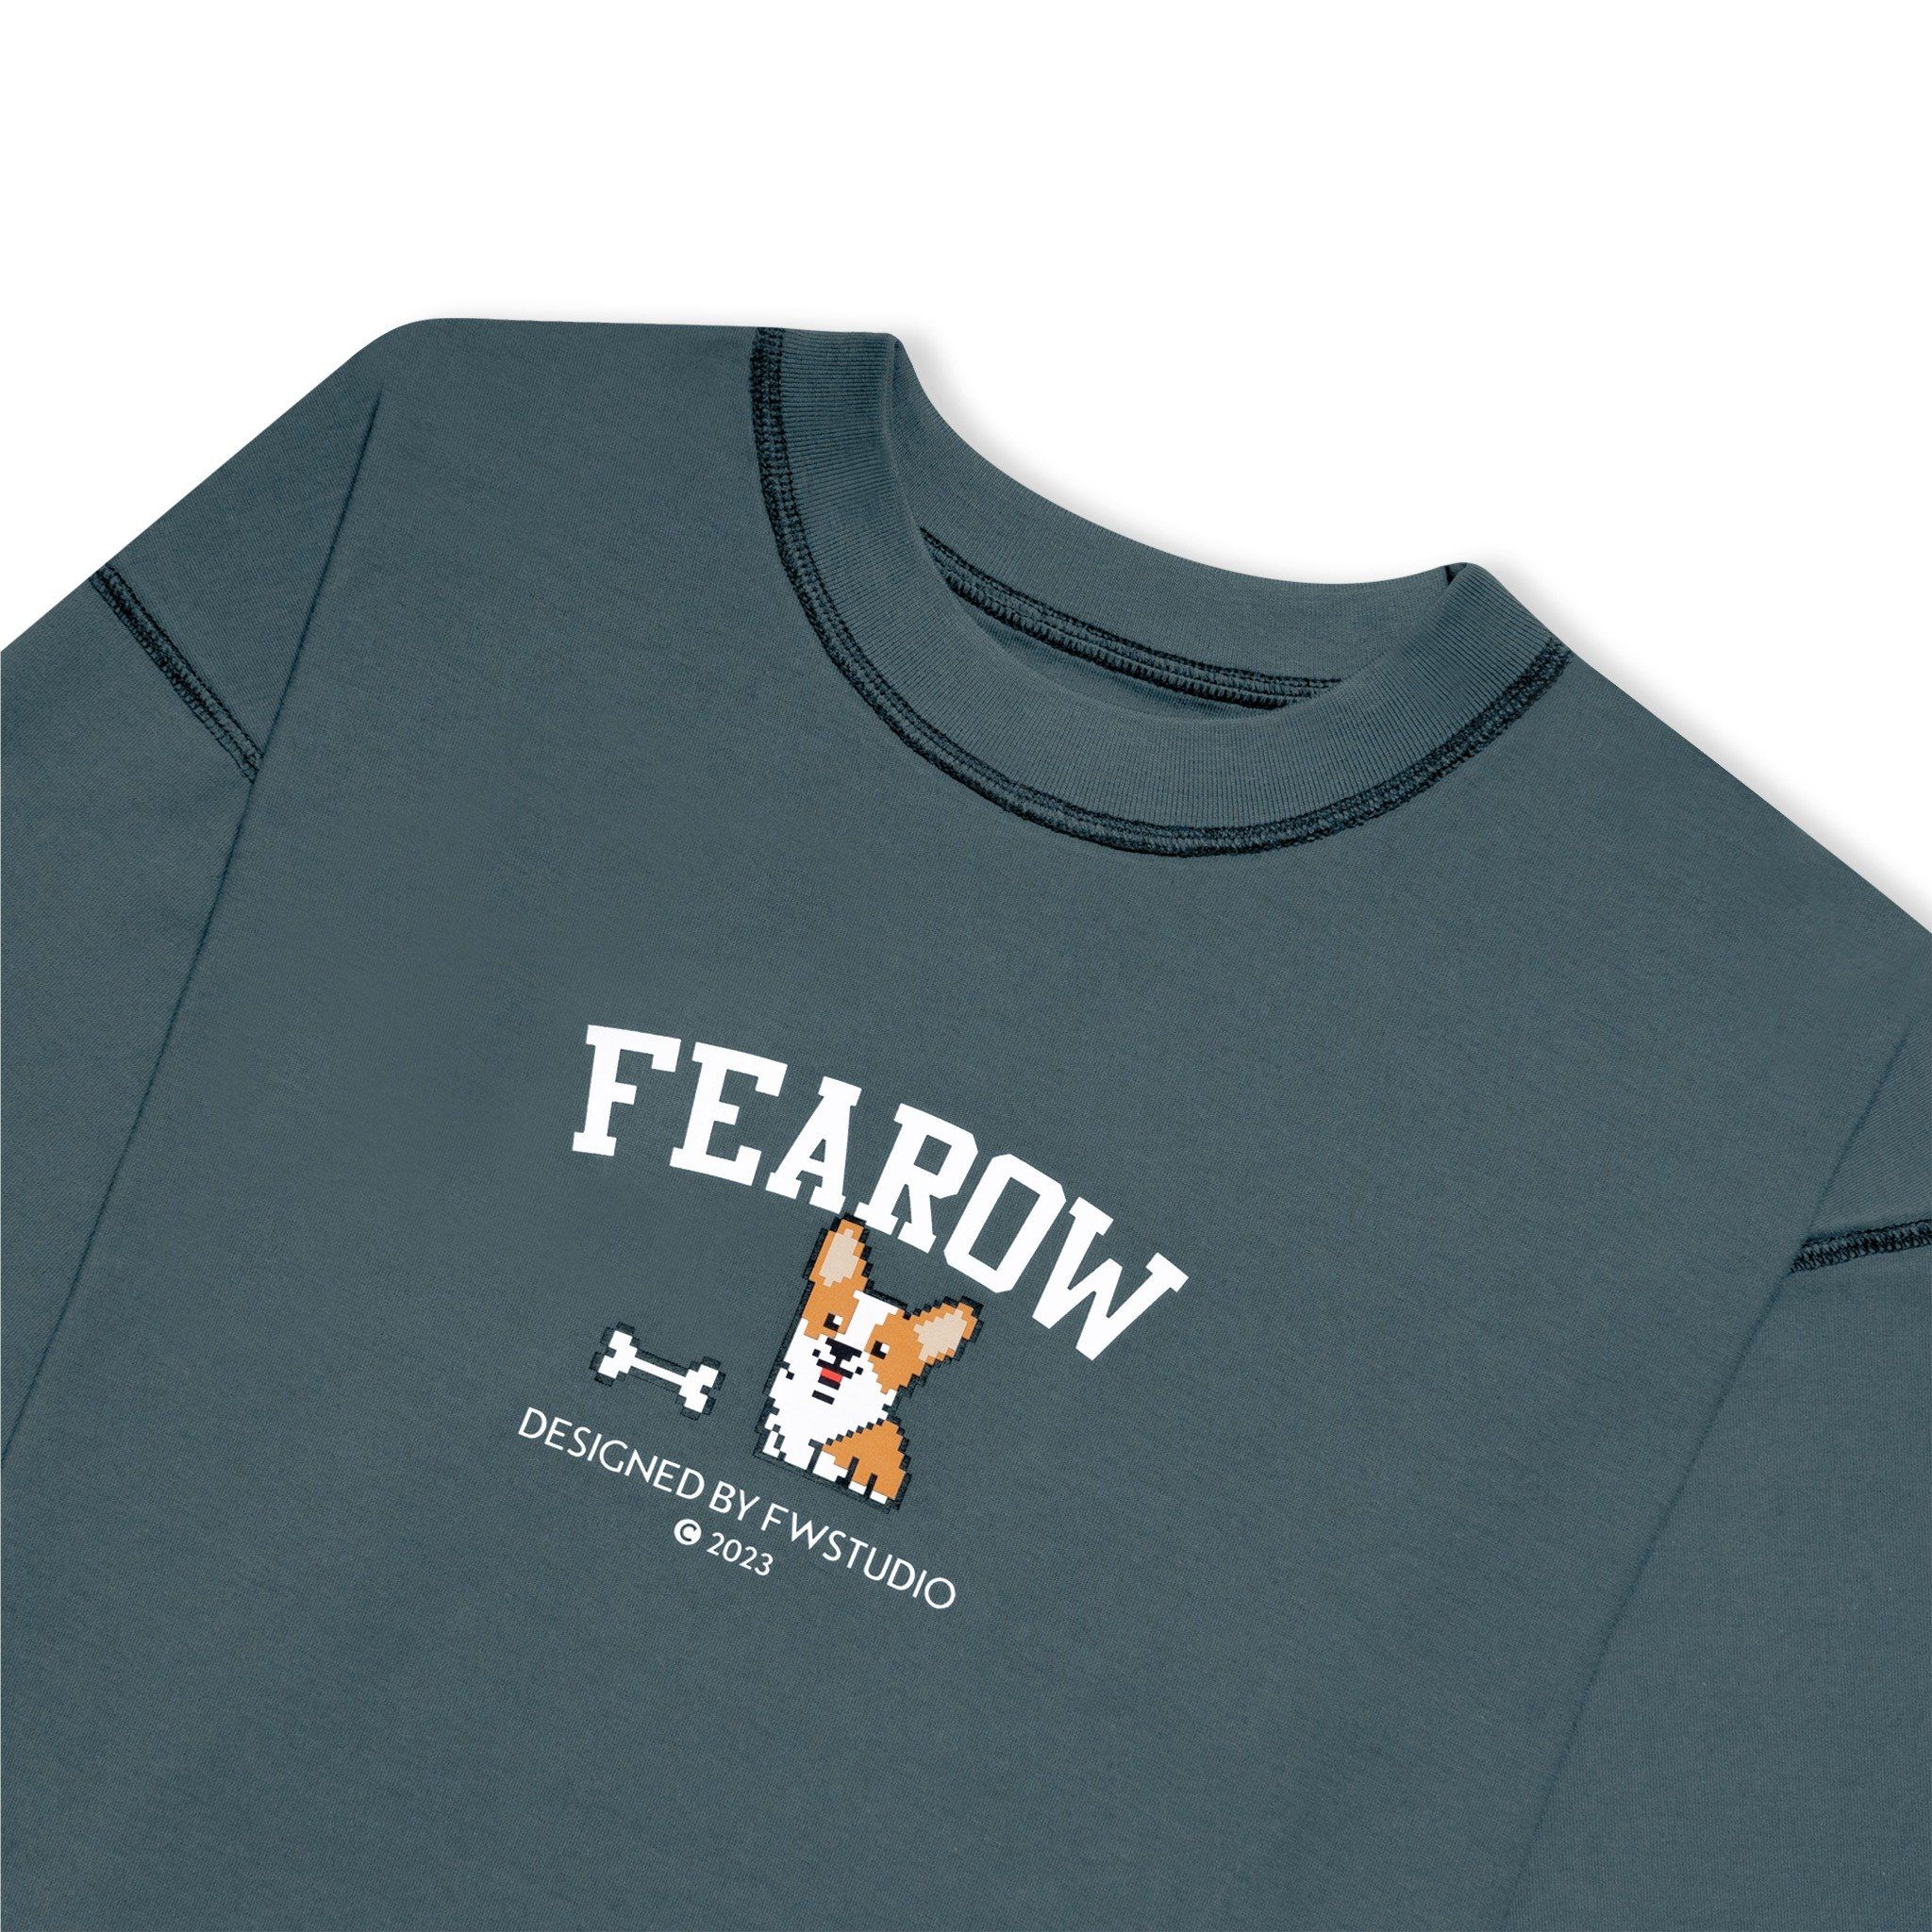  Fearow Double Tee Collection - Pixel Corgi / Dark Slate 